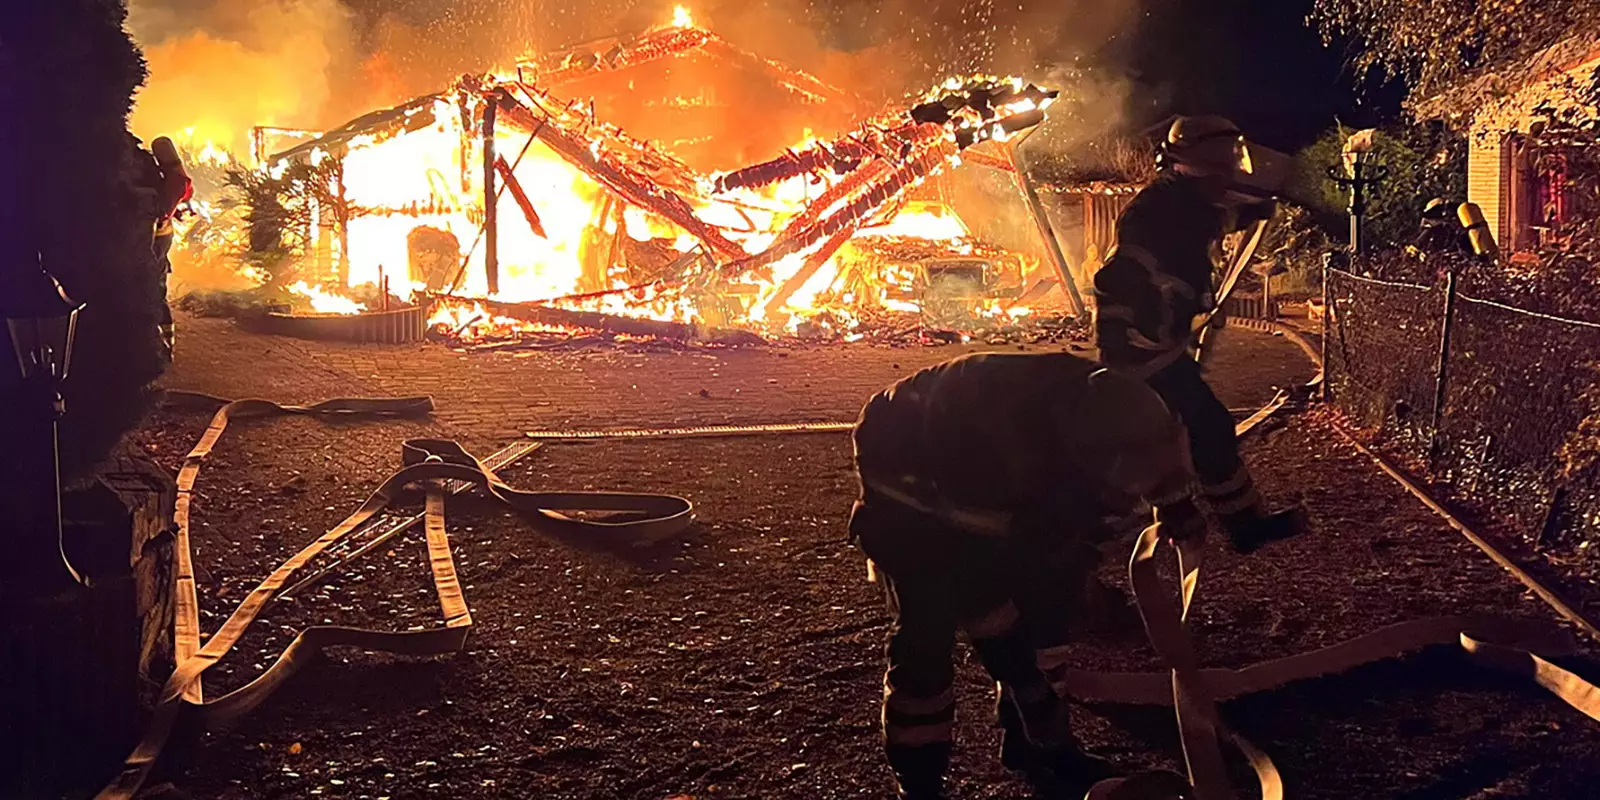 Das brennende Carport in Neugraben. Foto: Lenthe-Medien